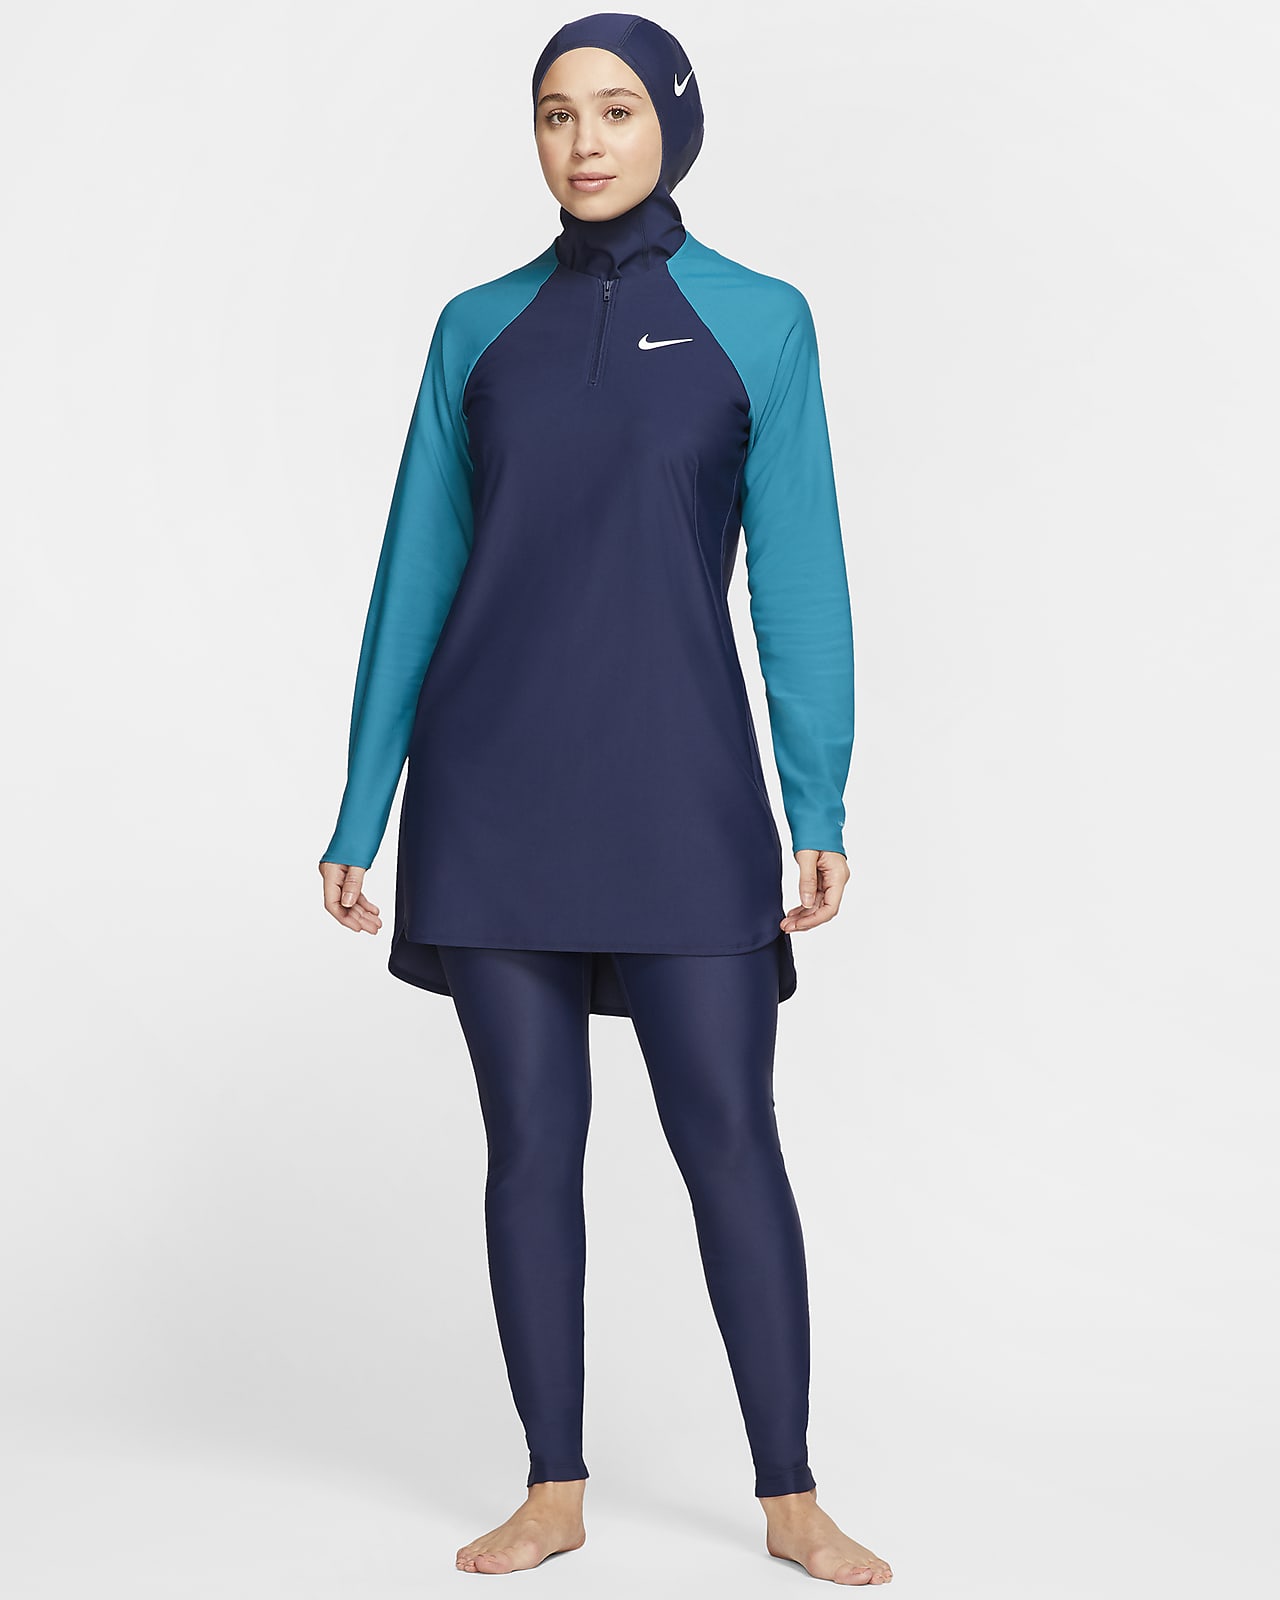 Fuldt dækkende slanke Nike Victory-svømmeleggings til kvinder